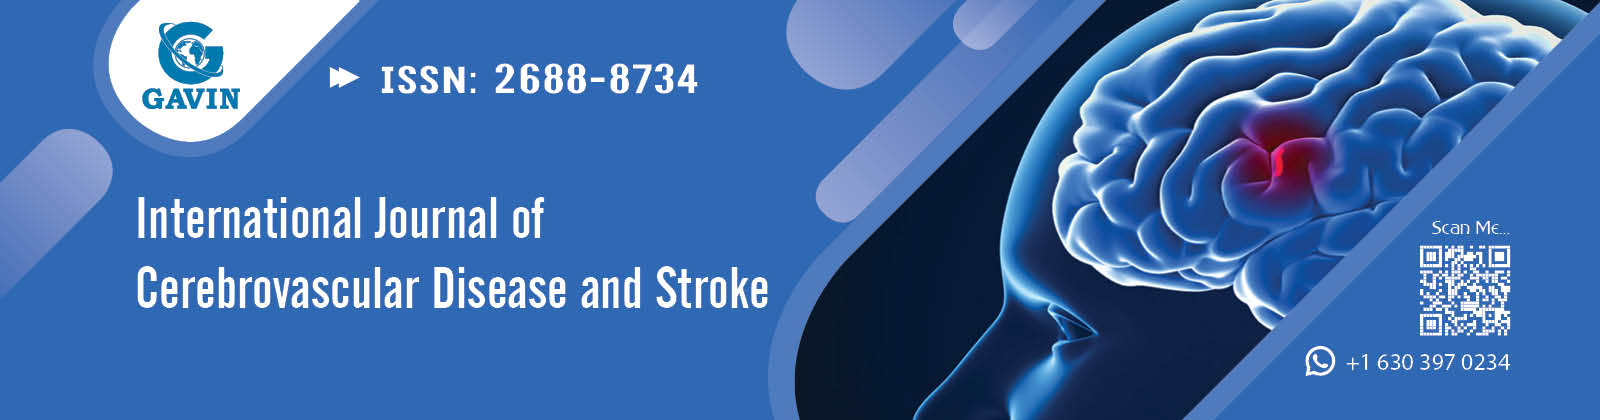 International Journal of Cerebrovascular Disease and Stroke